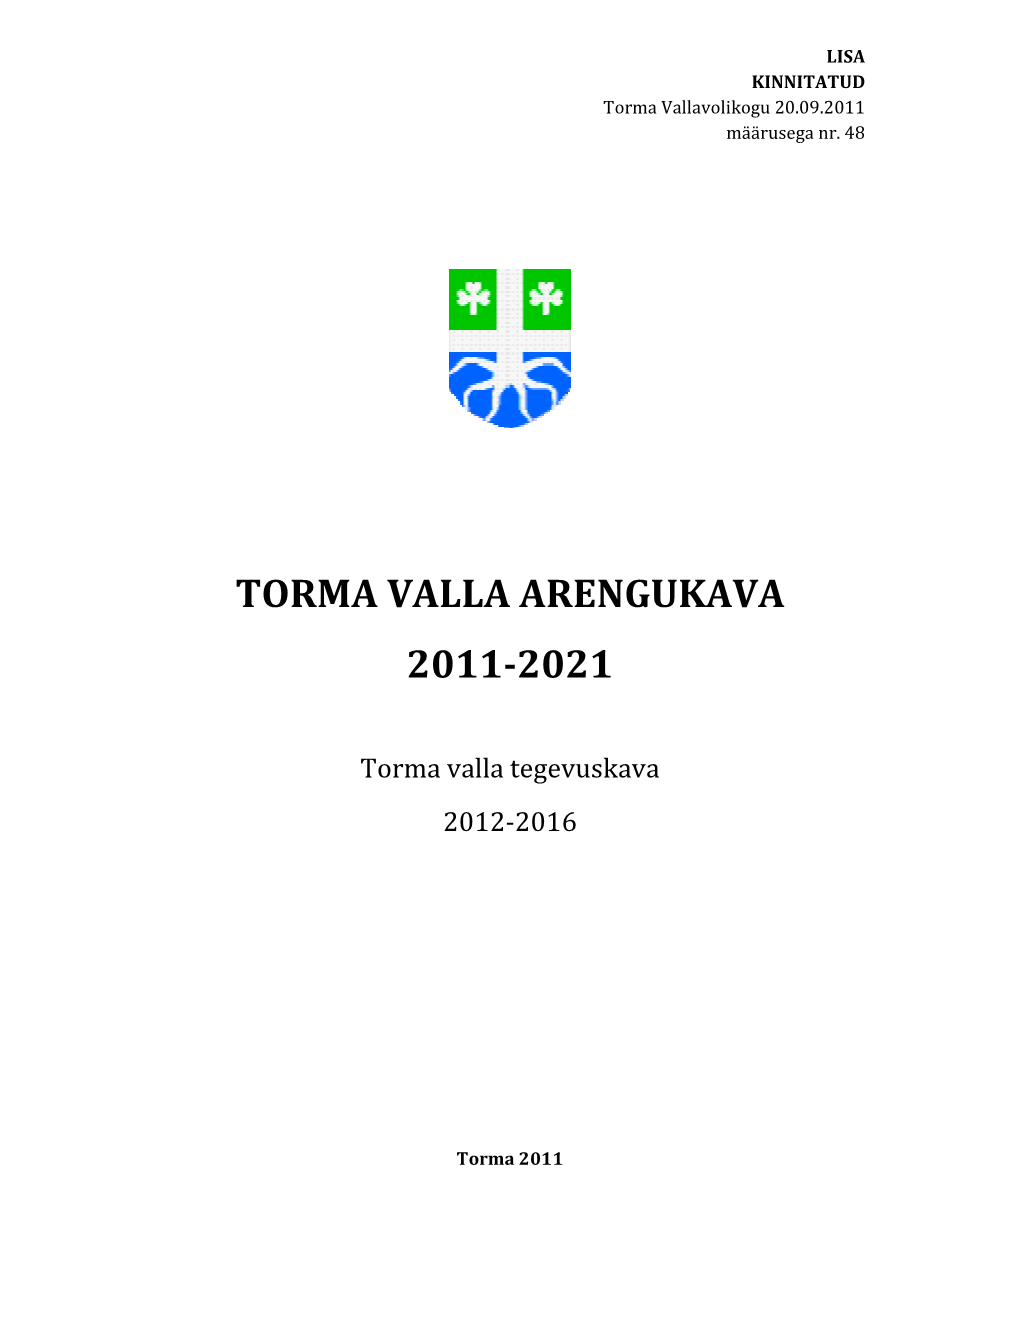 Torma Valla Arengukava 2011-2021